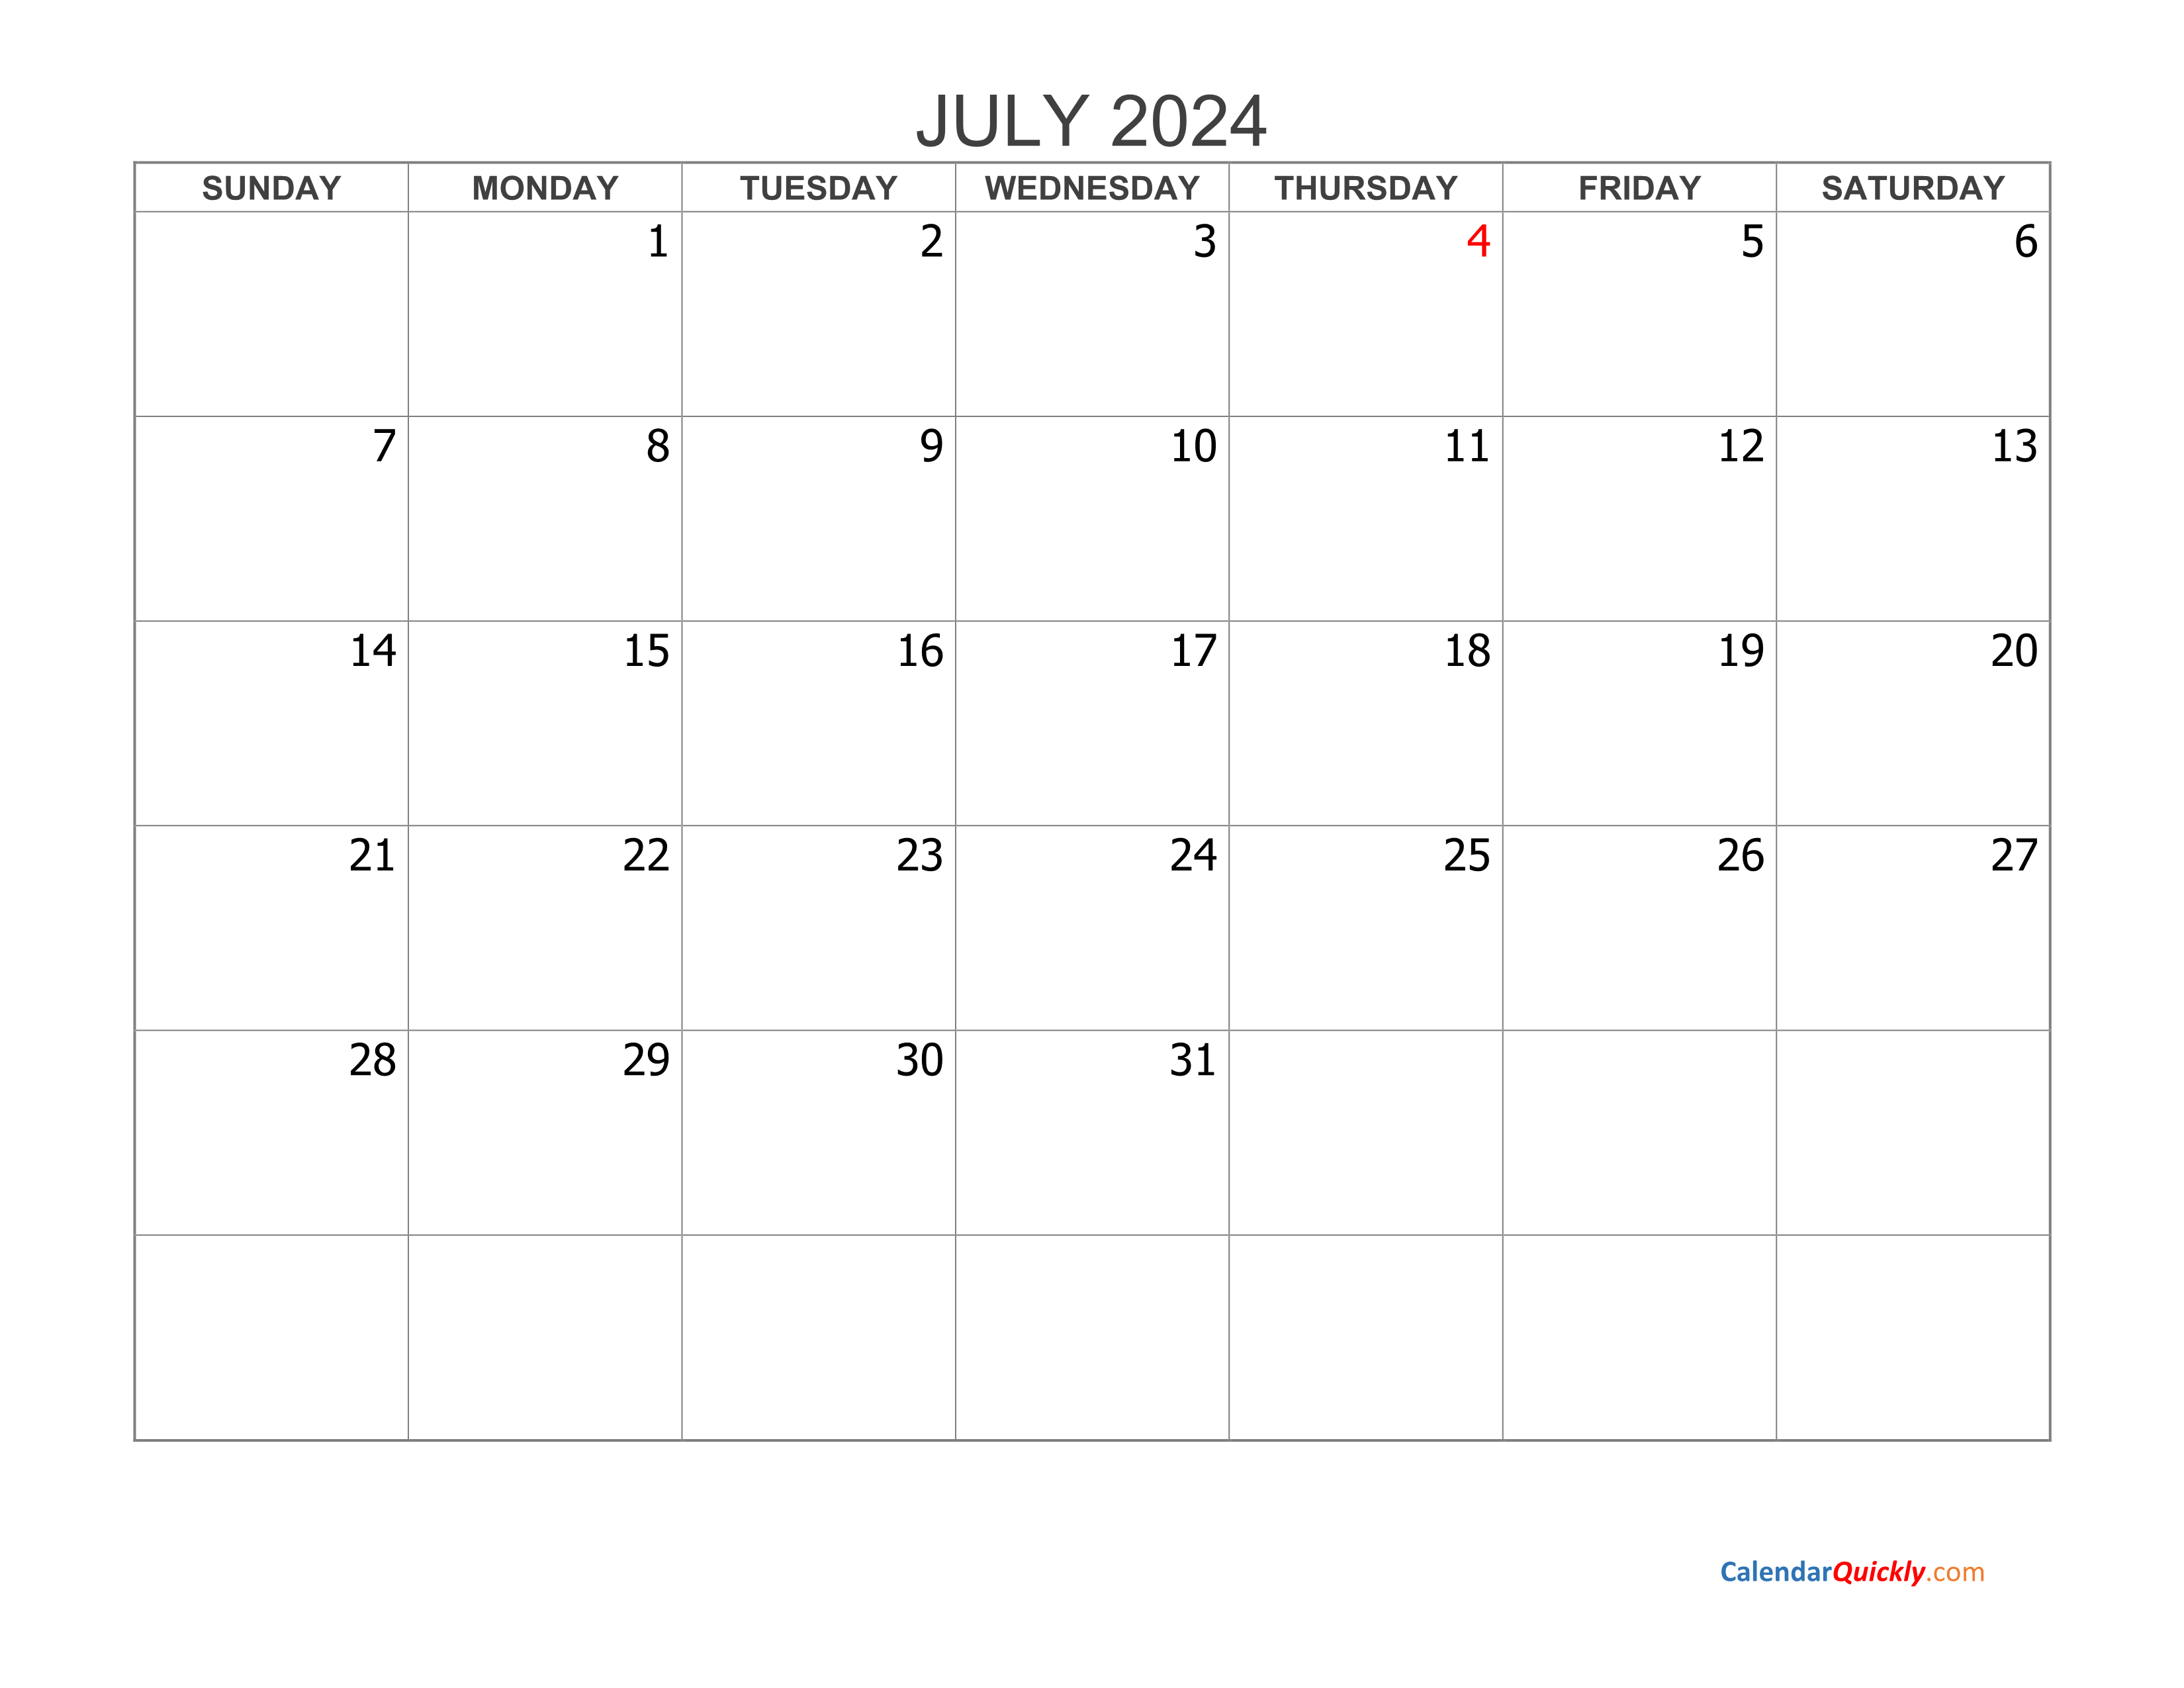 july-2024-blank-calendar-calendar-quickly